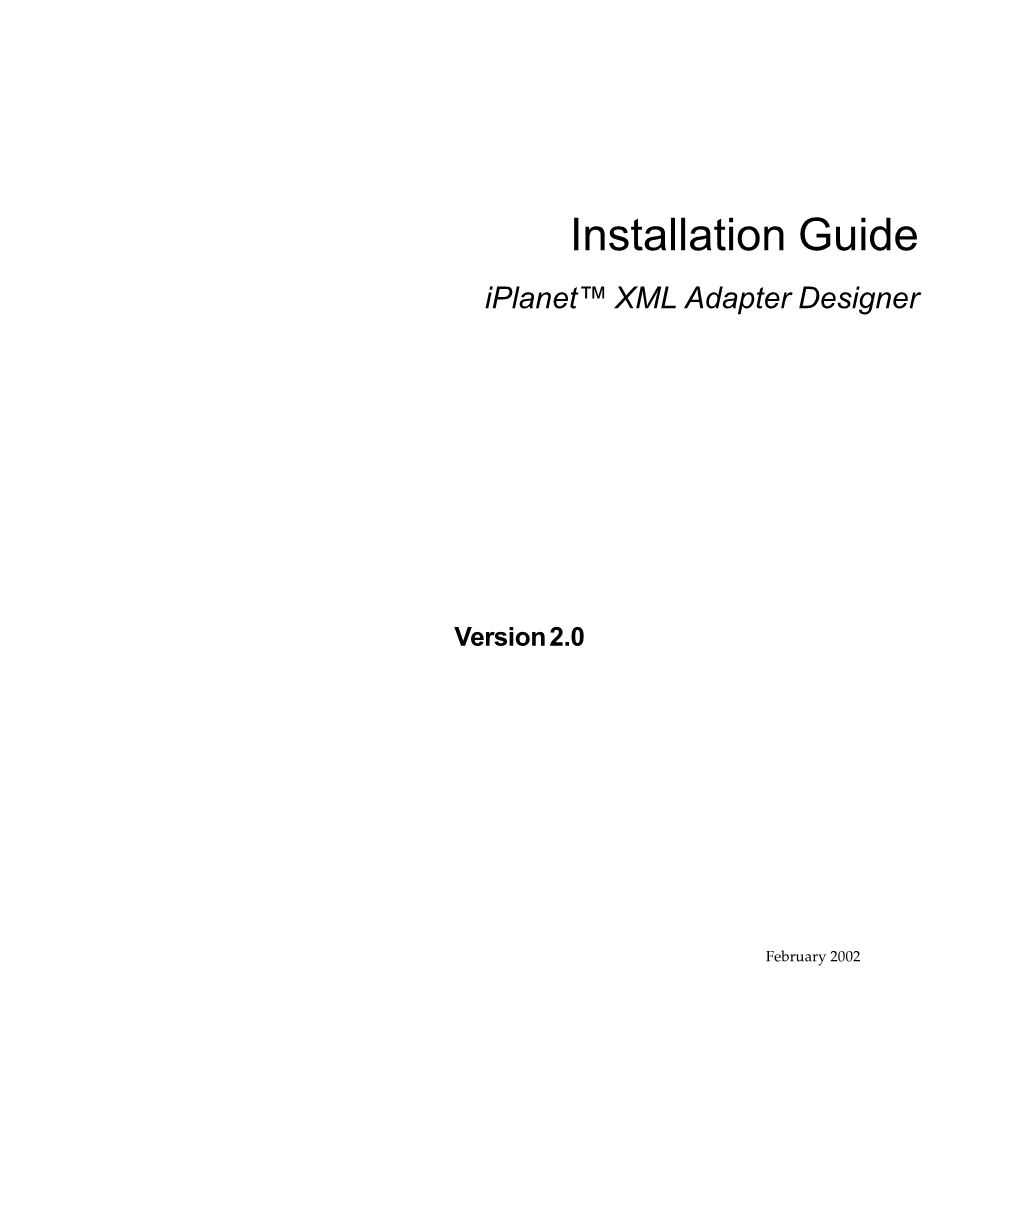 Iplanet XML Adapter Designer Installation Guide, Version